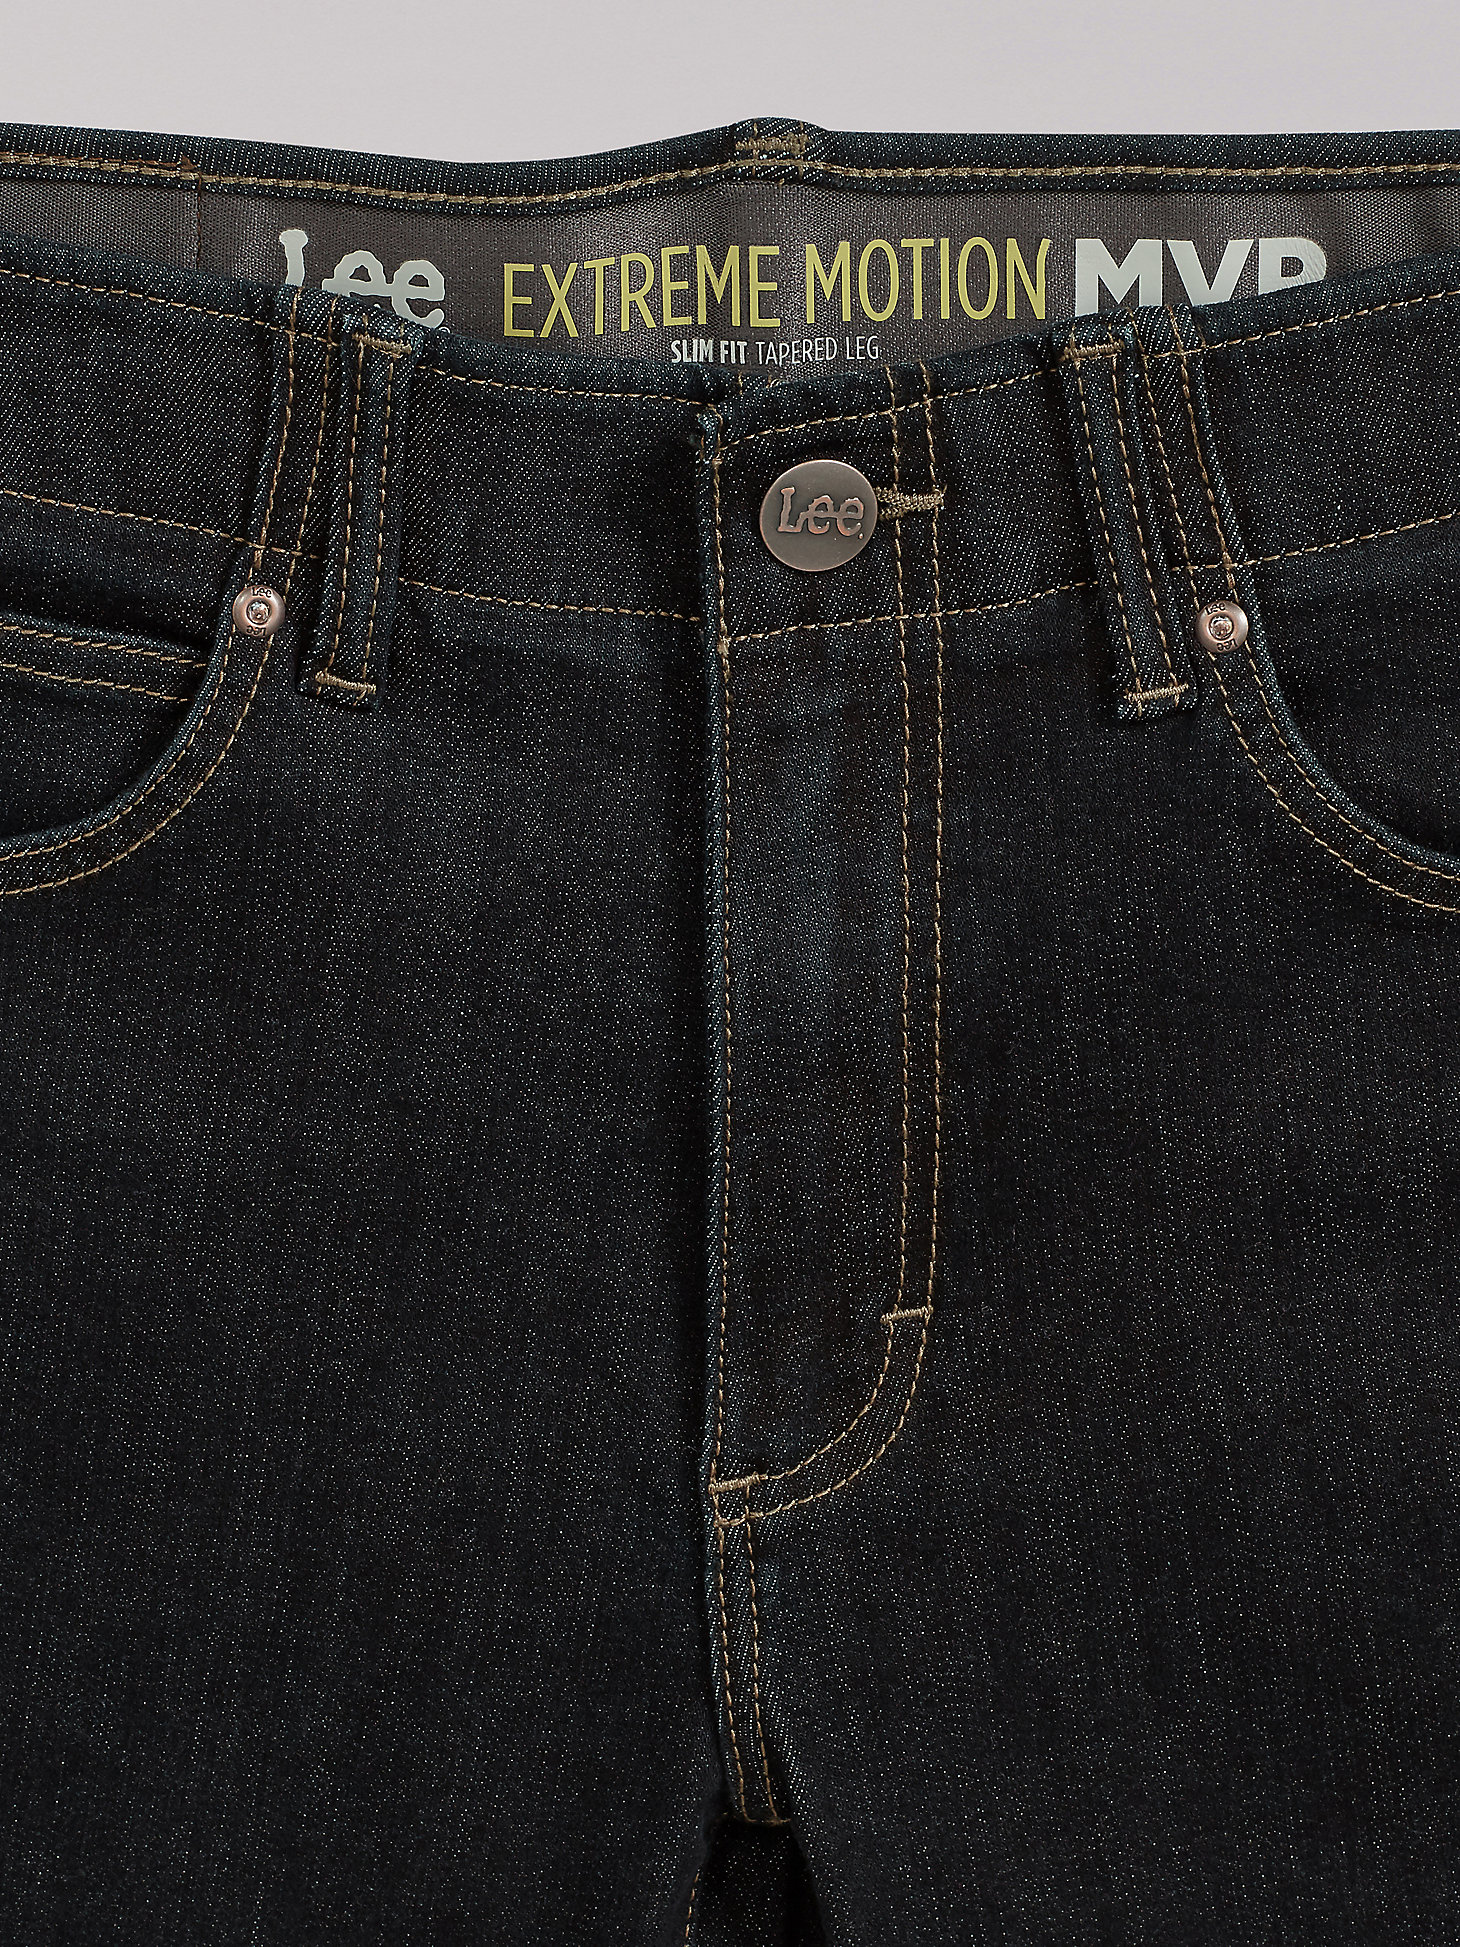 Men’s Extreme Motion MVP Slim Fit Tapered Jean in Rinse alternative view 7